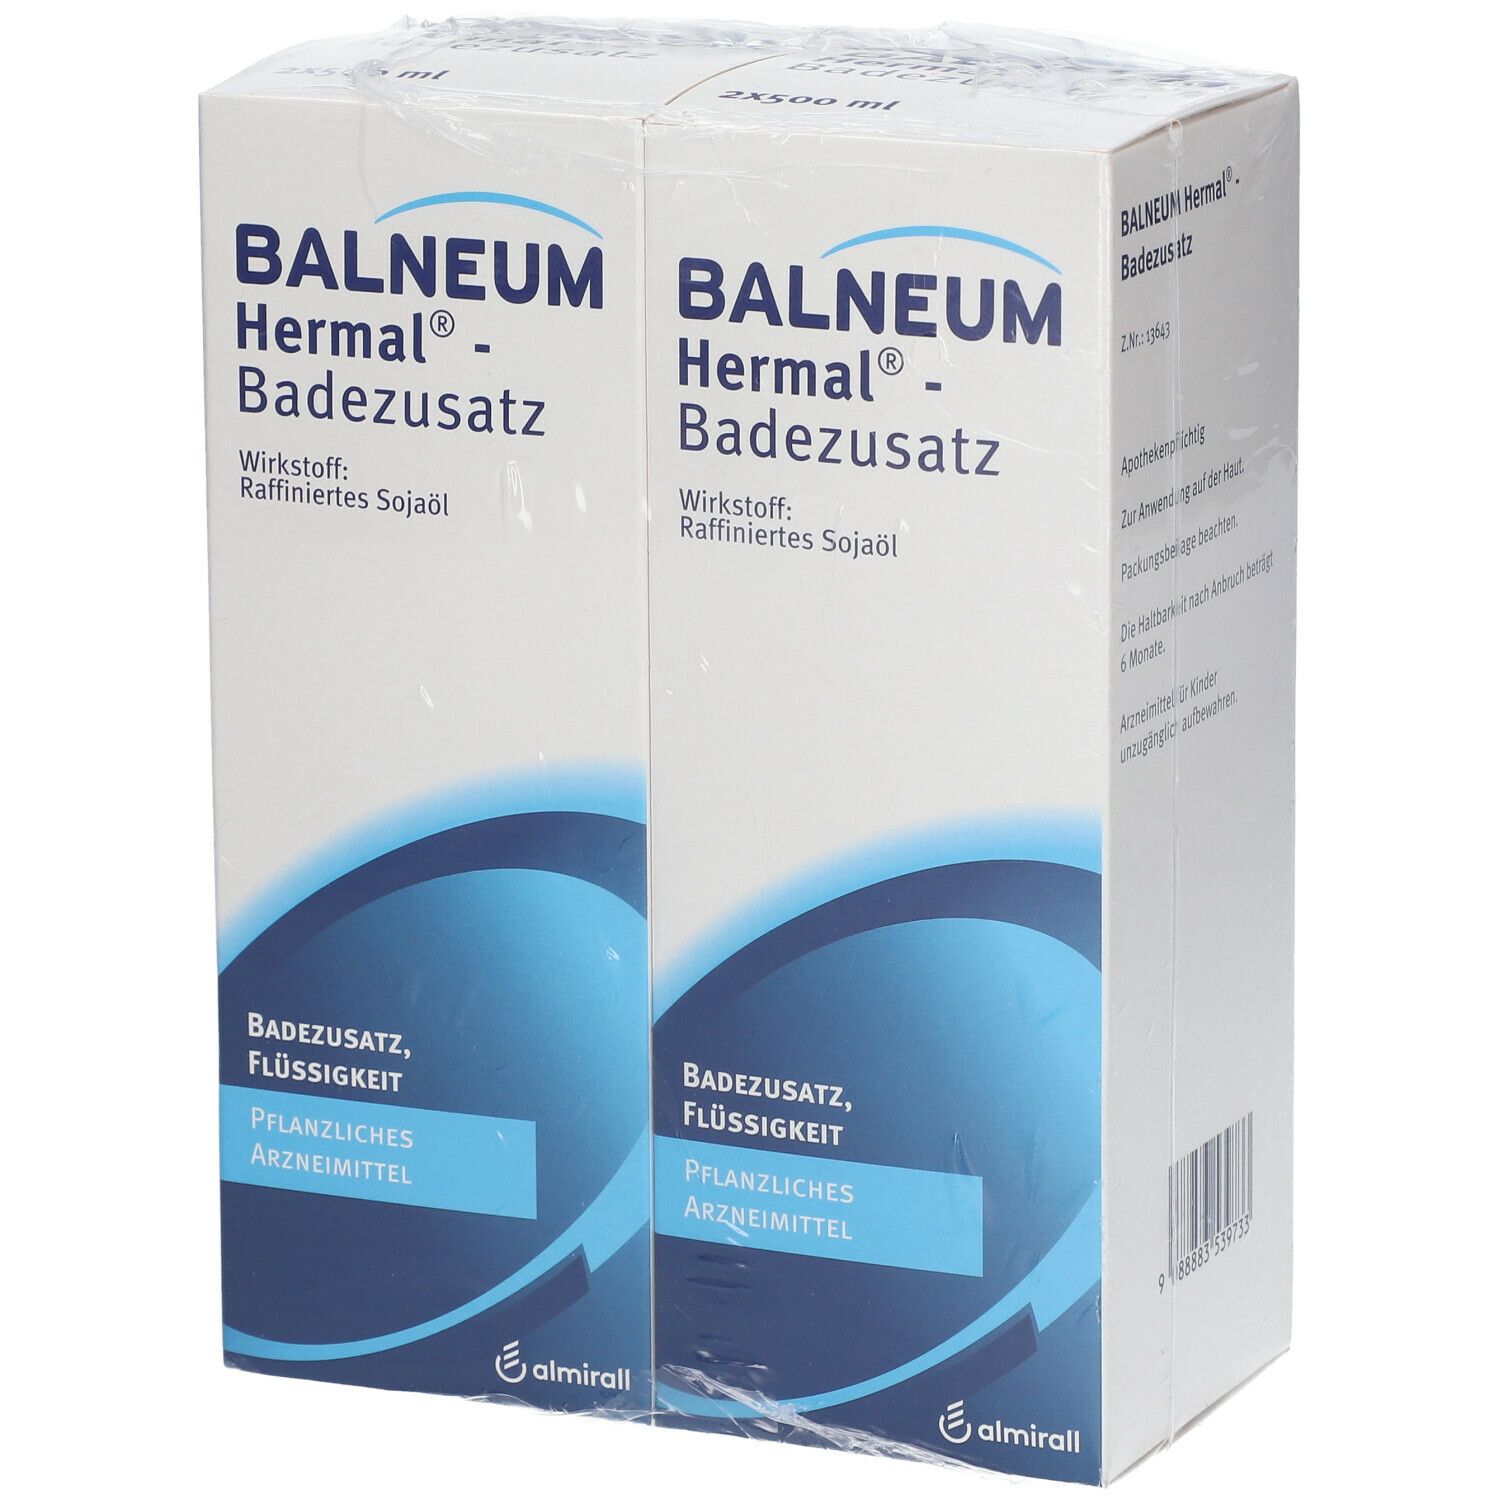 Balneum Hermal®-Badezusatz